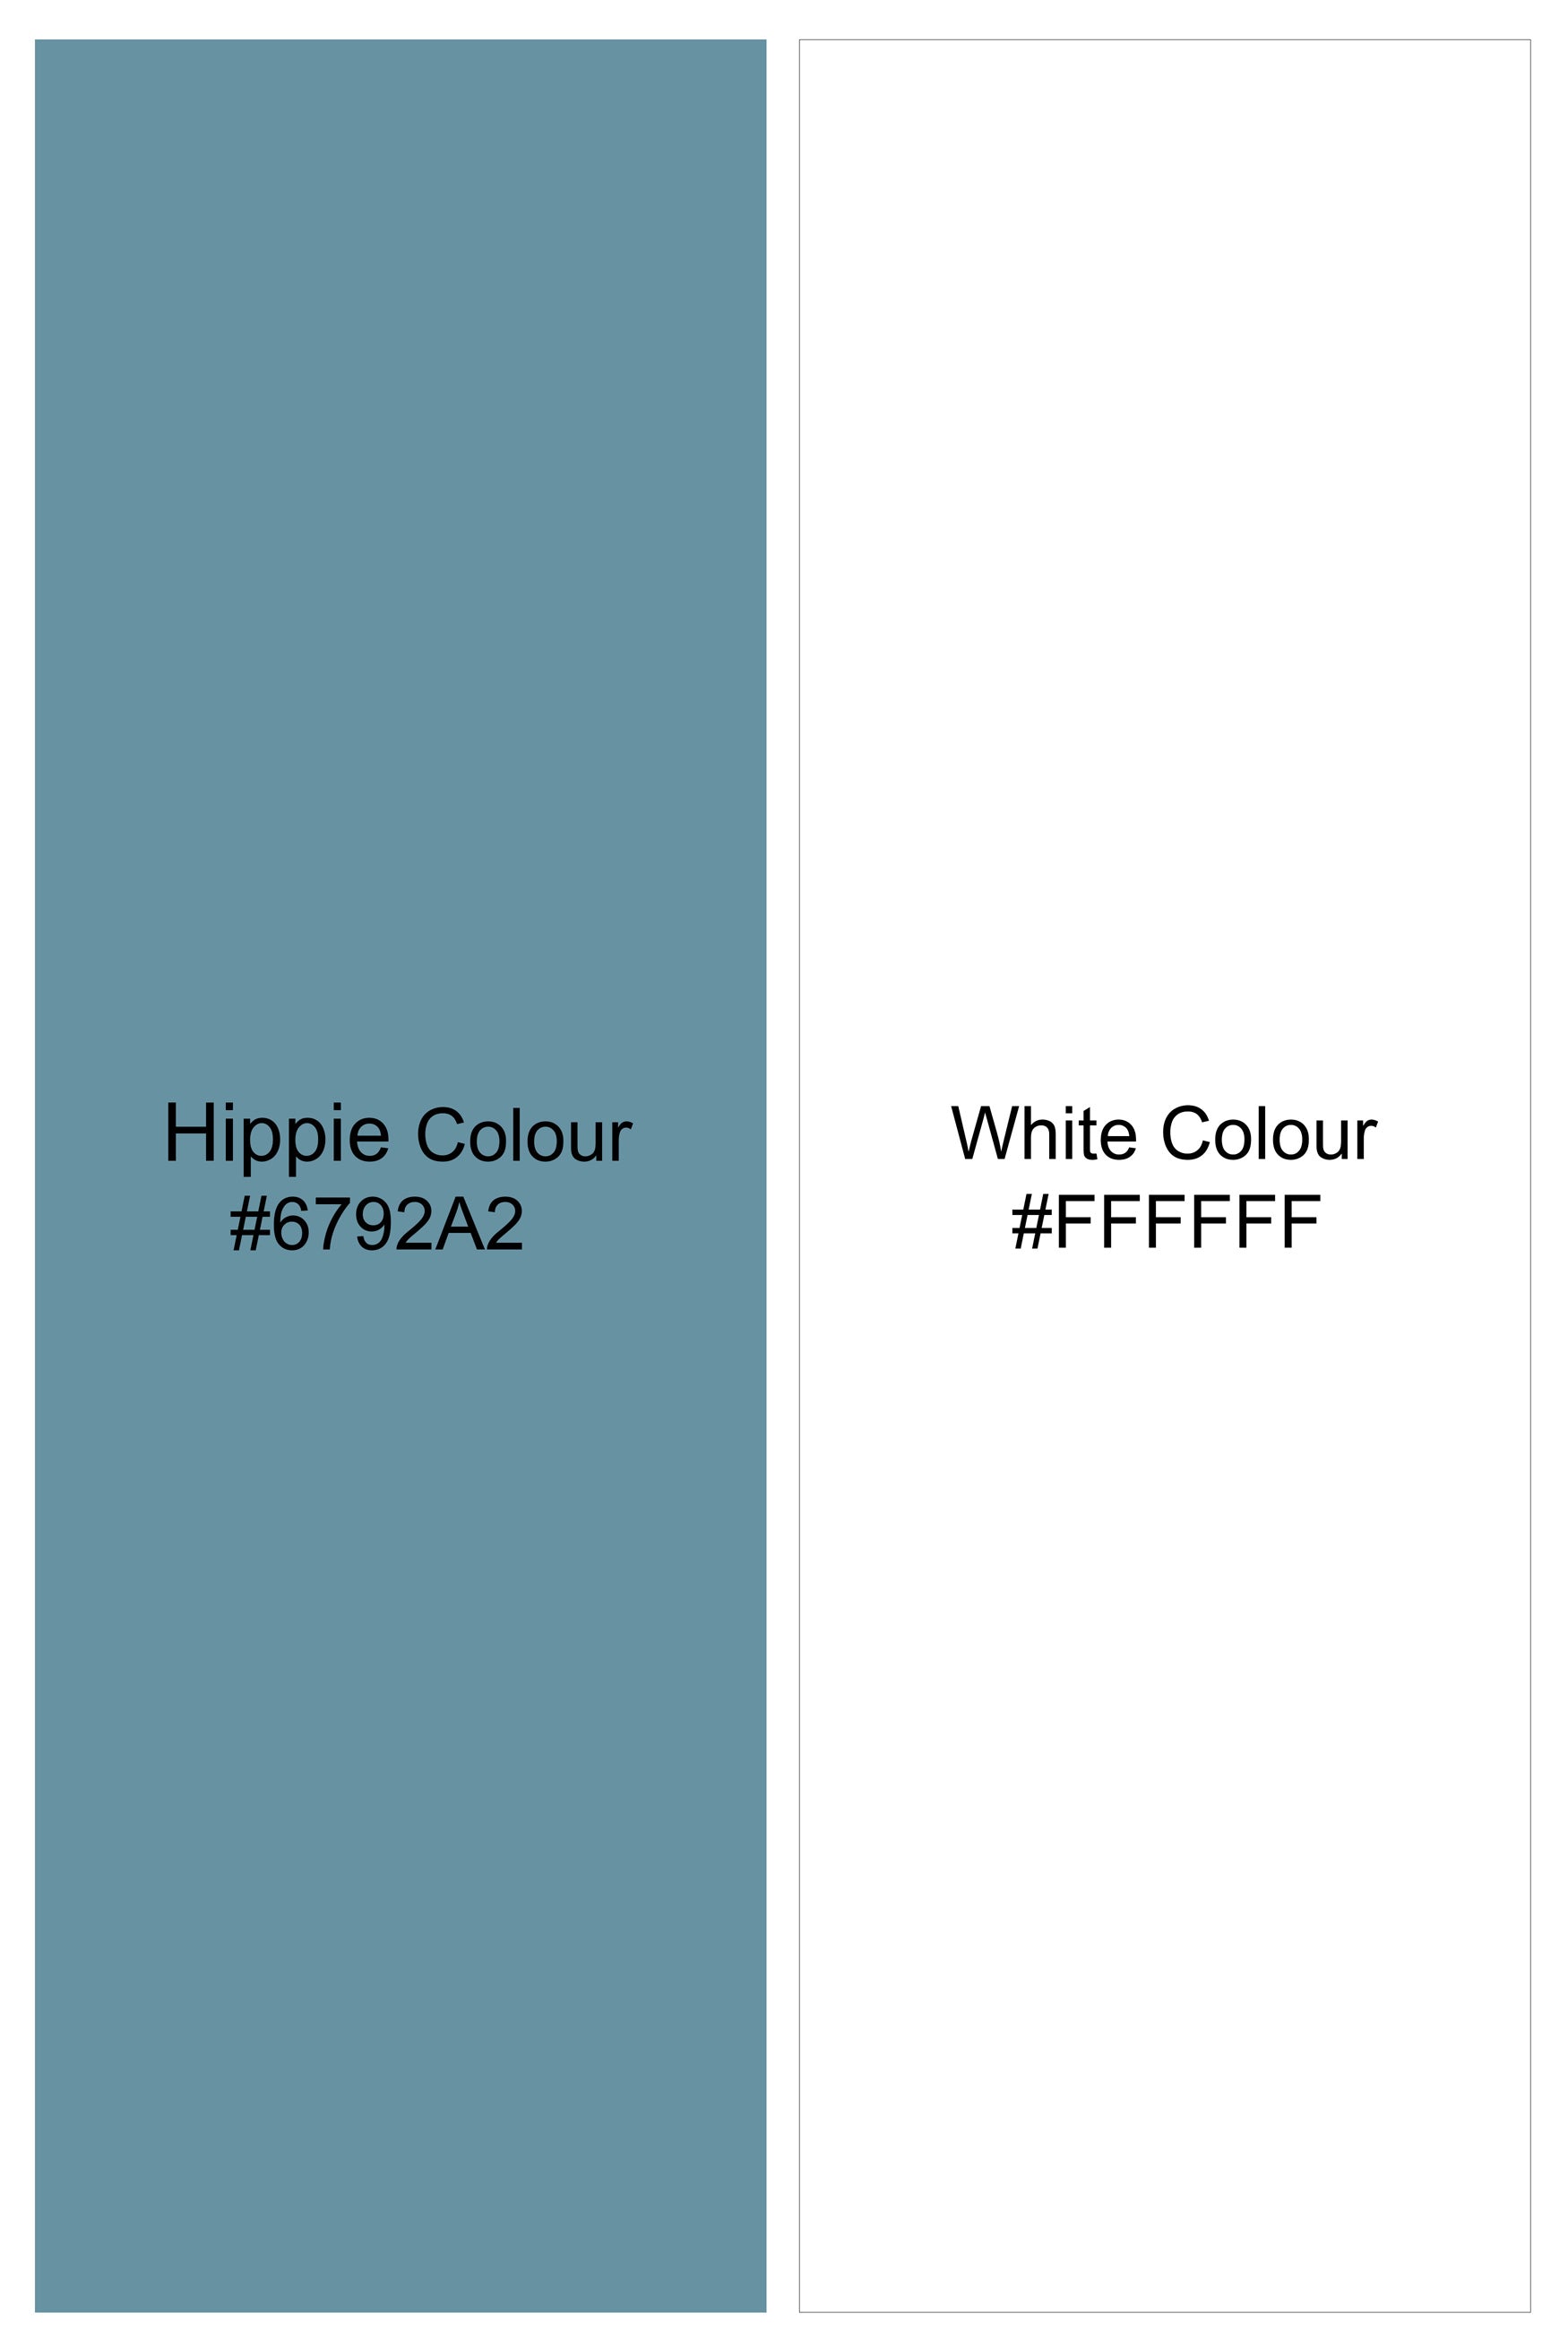 Hippie Blue and White Ditsy Printed Premium Cotton Shirt 11758-38, 11758-H-38, 11758-39, 11758-H-39, 11758-40, 11758-H-40, 11758-42, 11758-H-42, 11758-44, 11758-H-44, 11758-46, 11758-H-46, 11758-48, 11758-H-48, 11758-50, 11758-H-50, 11758-52, 11758-H-52